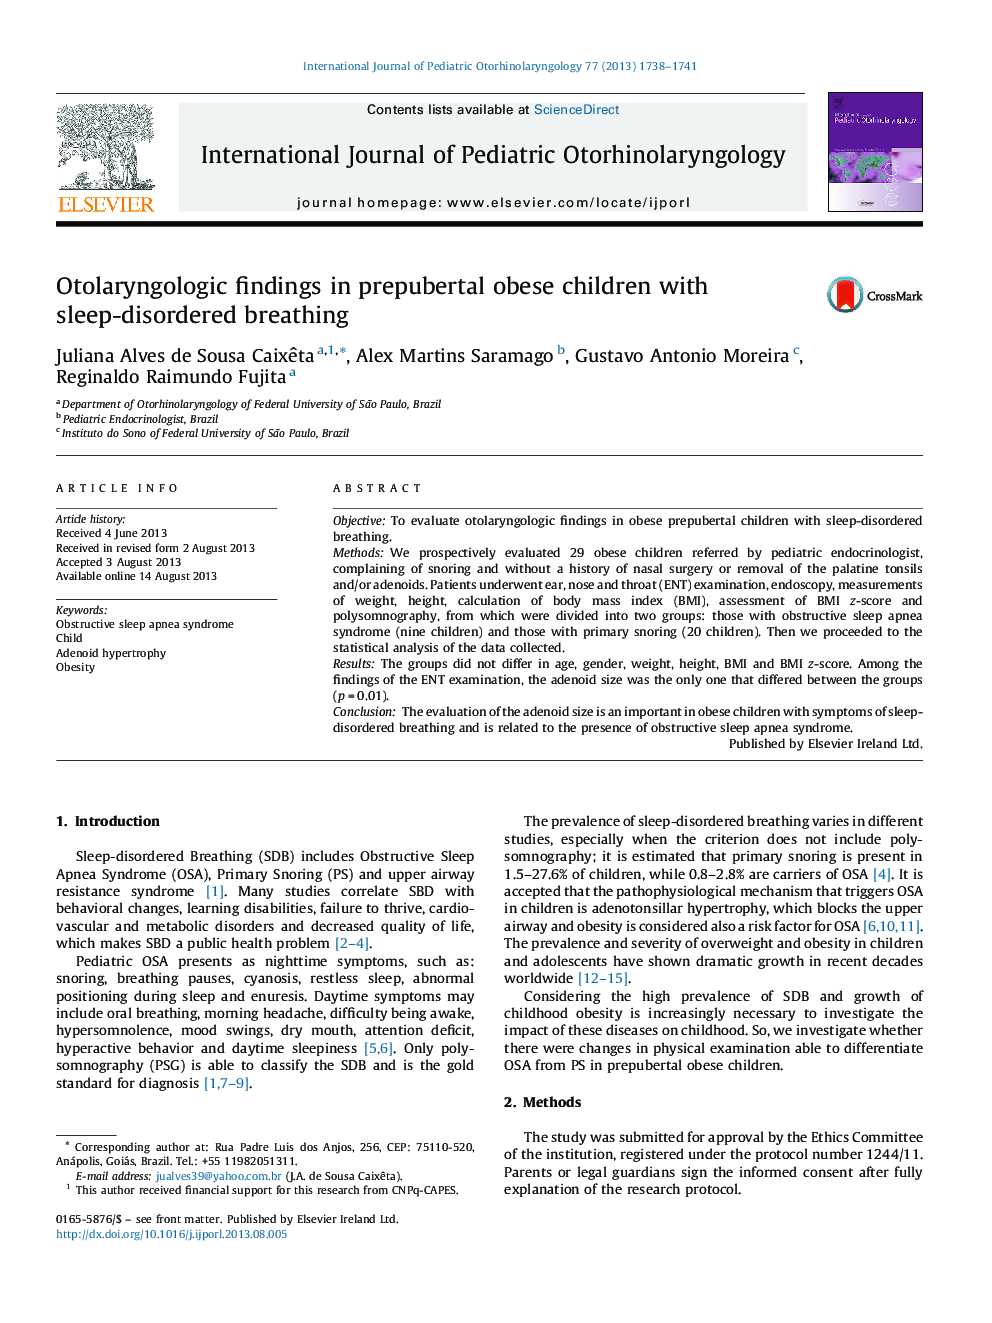 Otolaryngologic findings in prepubertal obese children with sleep-disordered breathing